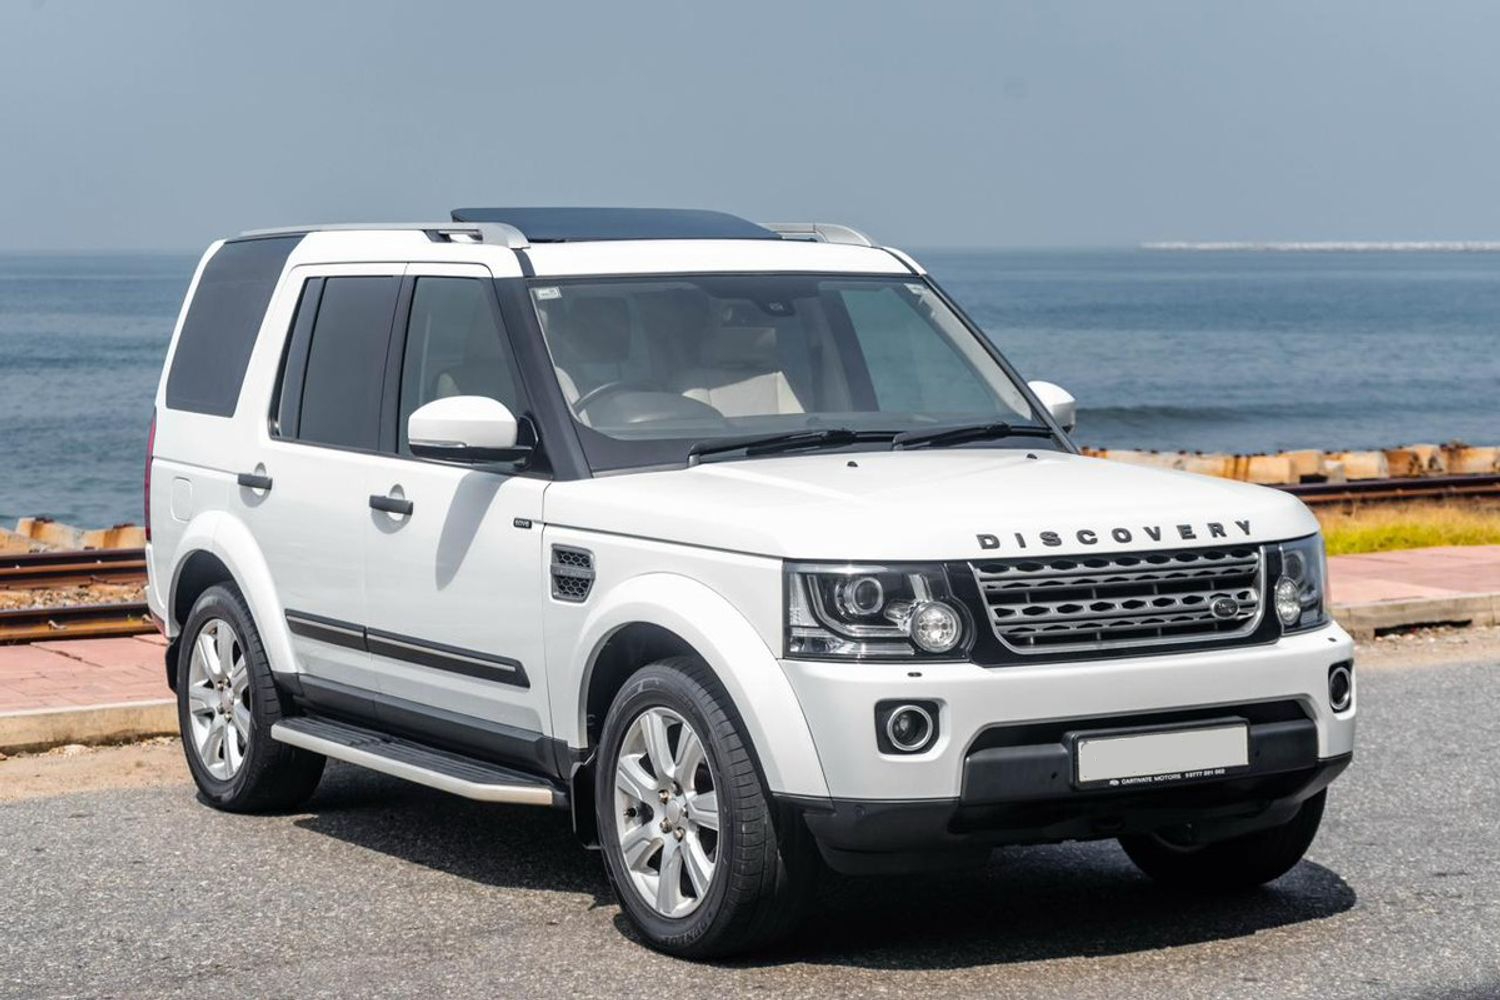 Toyota Land Cruiser Prado vs Land Rover Discovery Luxury